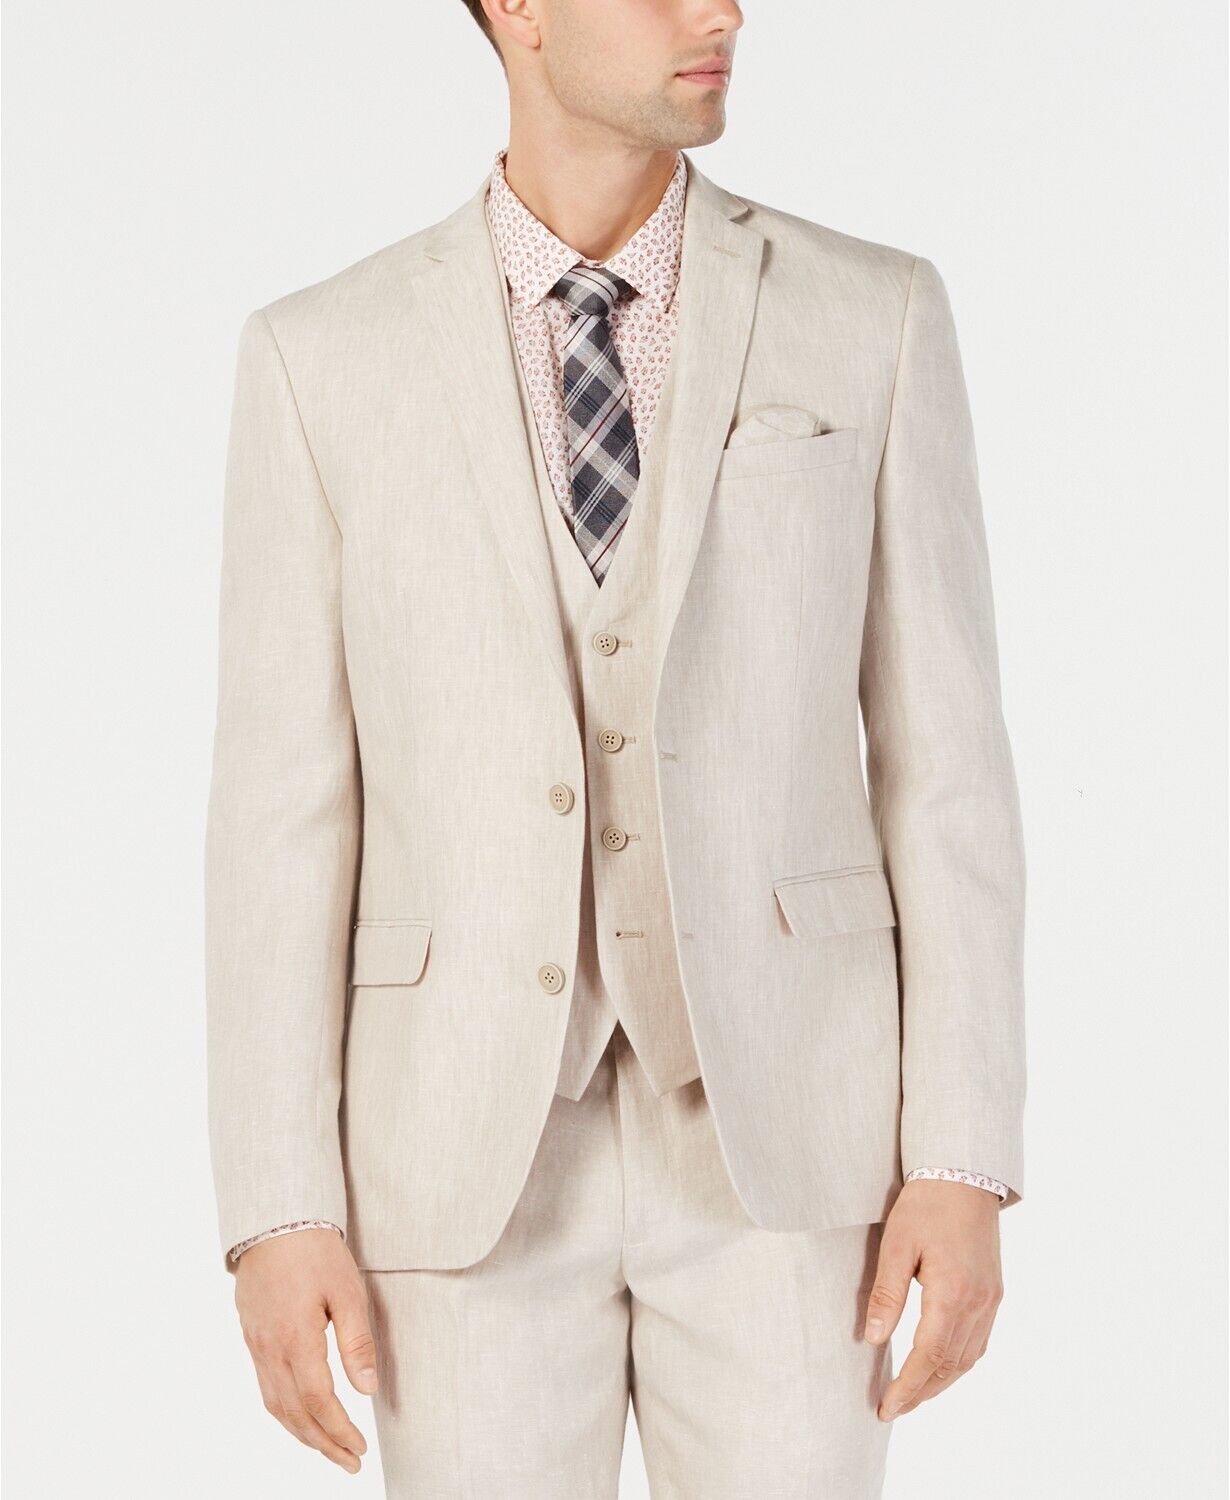 Bar III Men's Slim-Fit Linen Tan Suit Jacket 38L Sport Coat